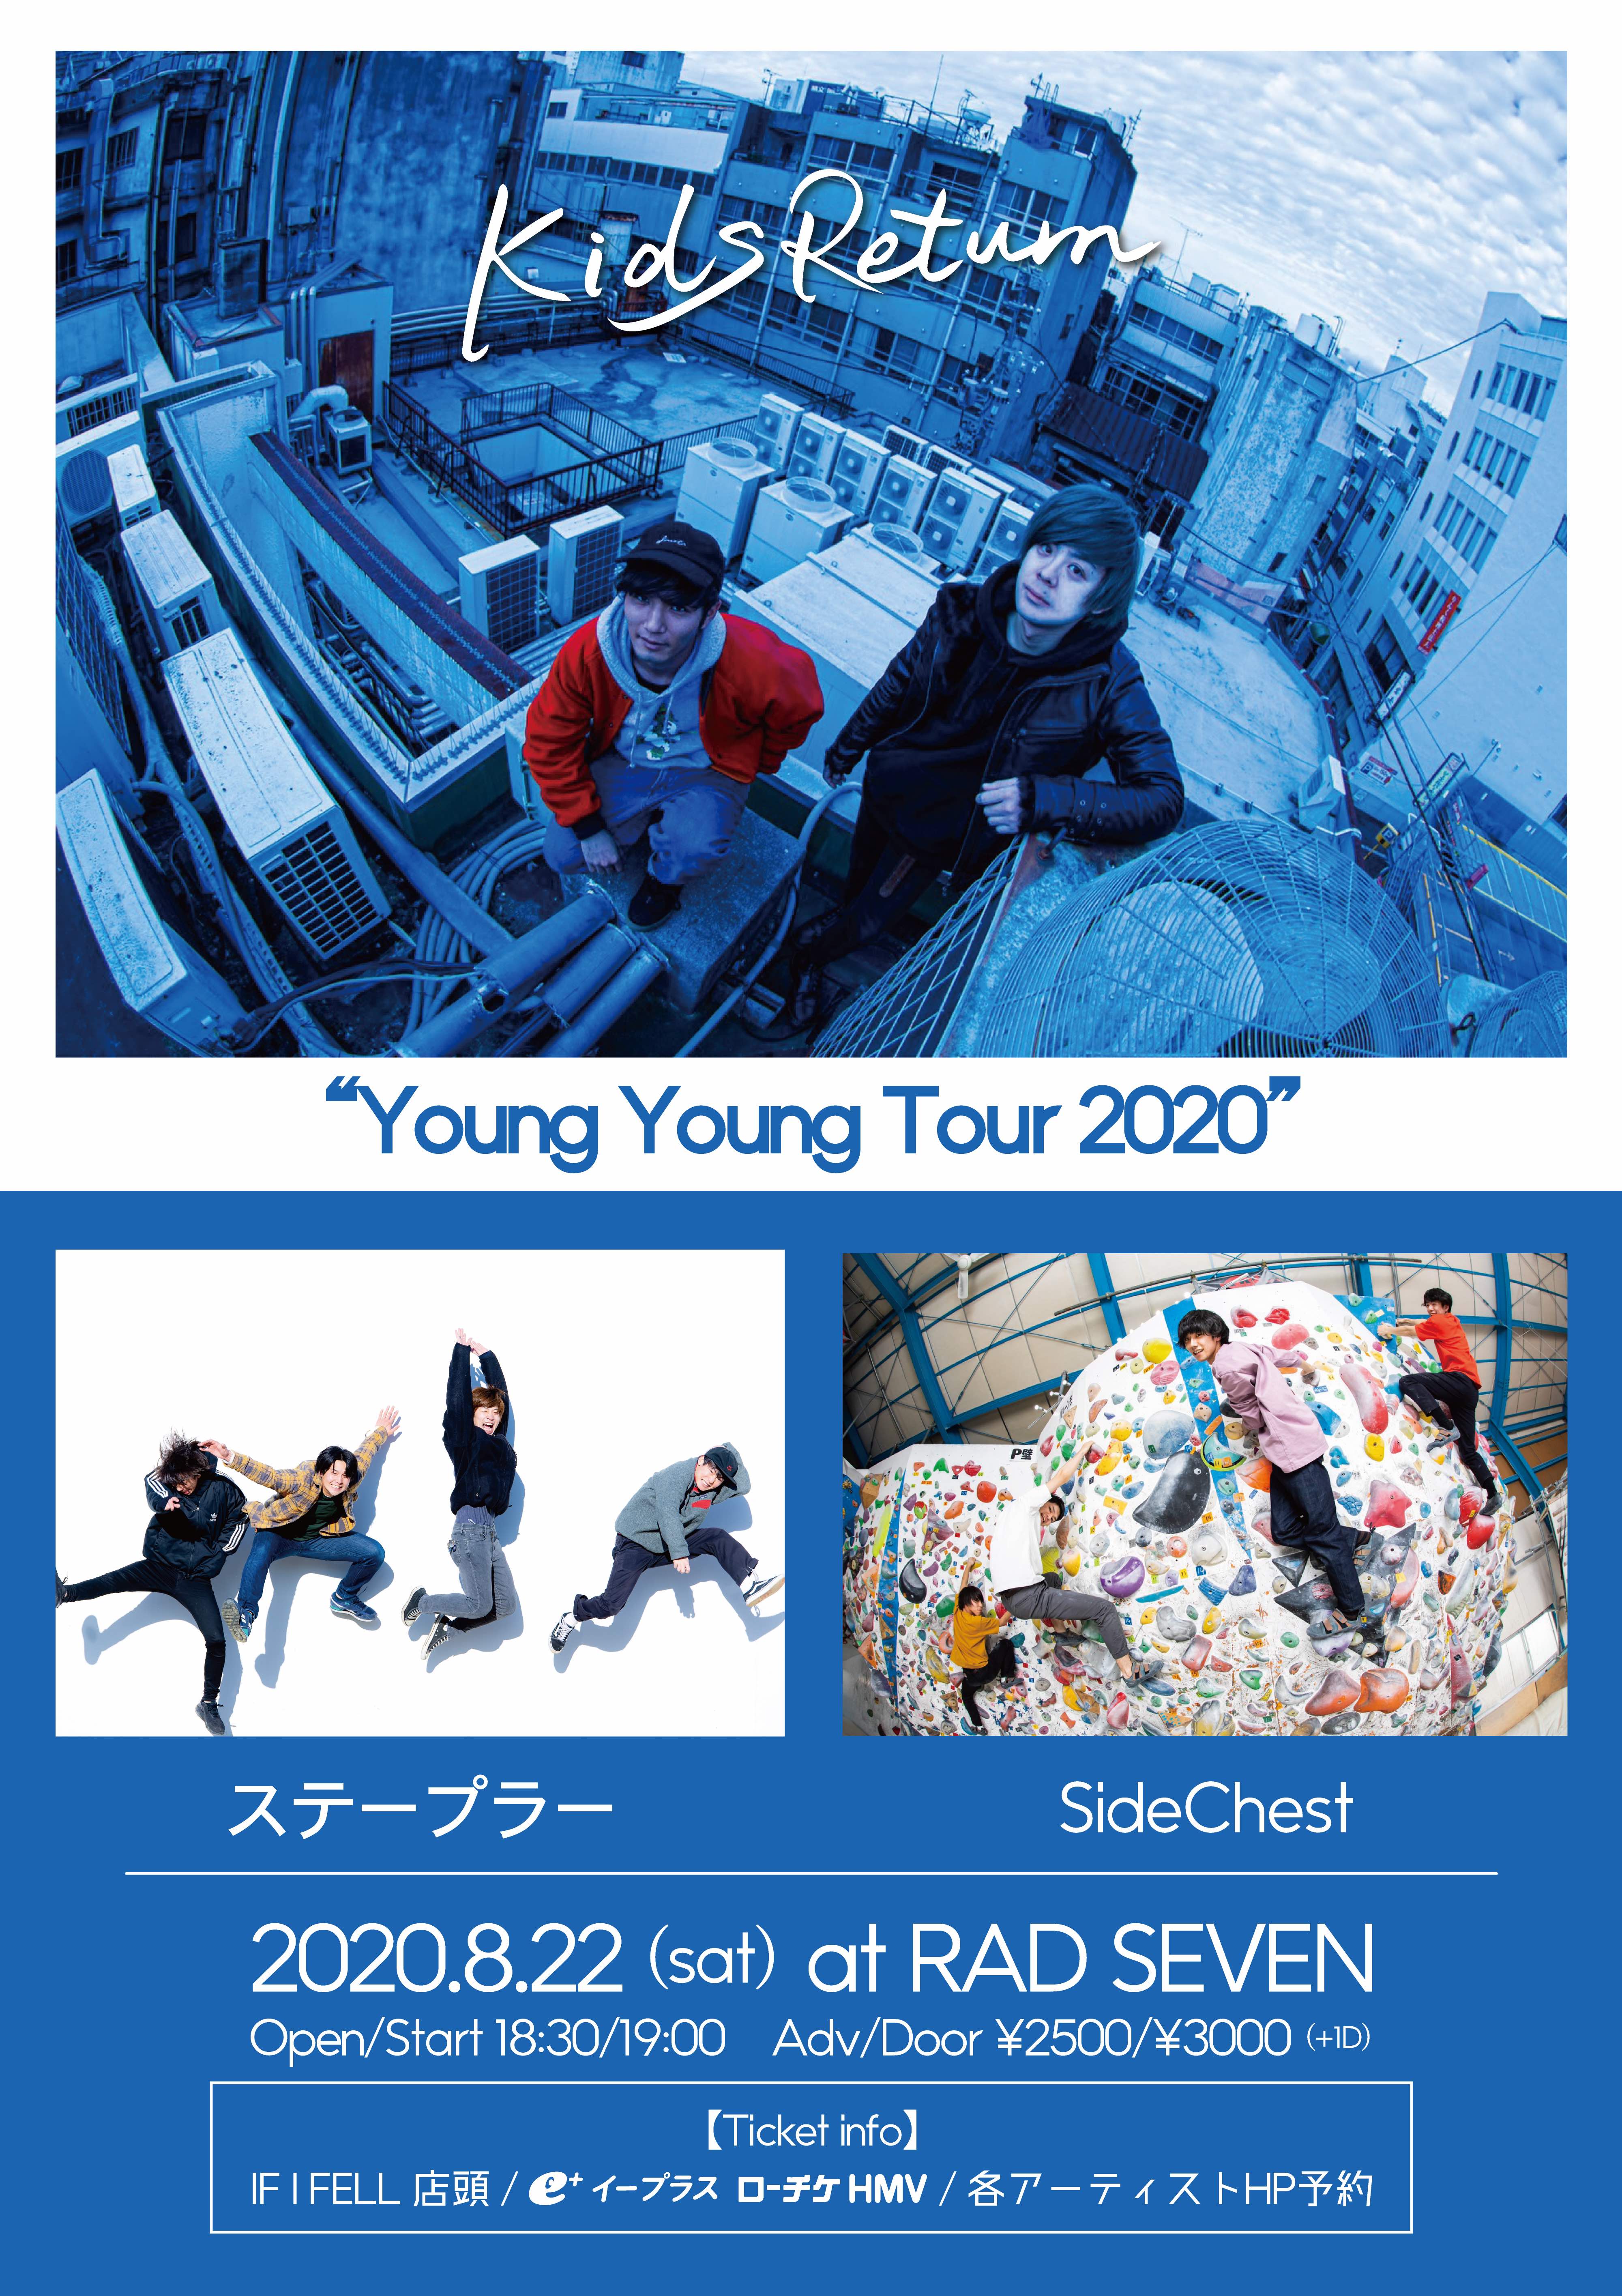 Kids Return "Young Young Tour 2020"